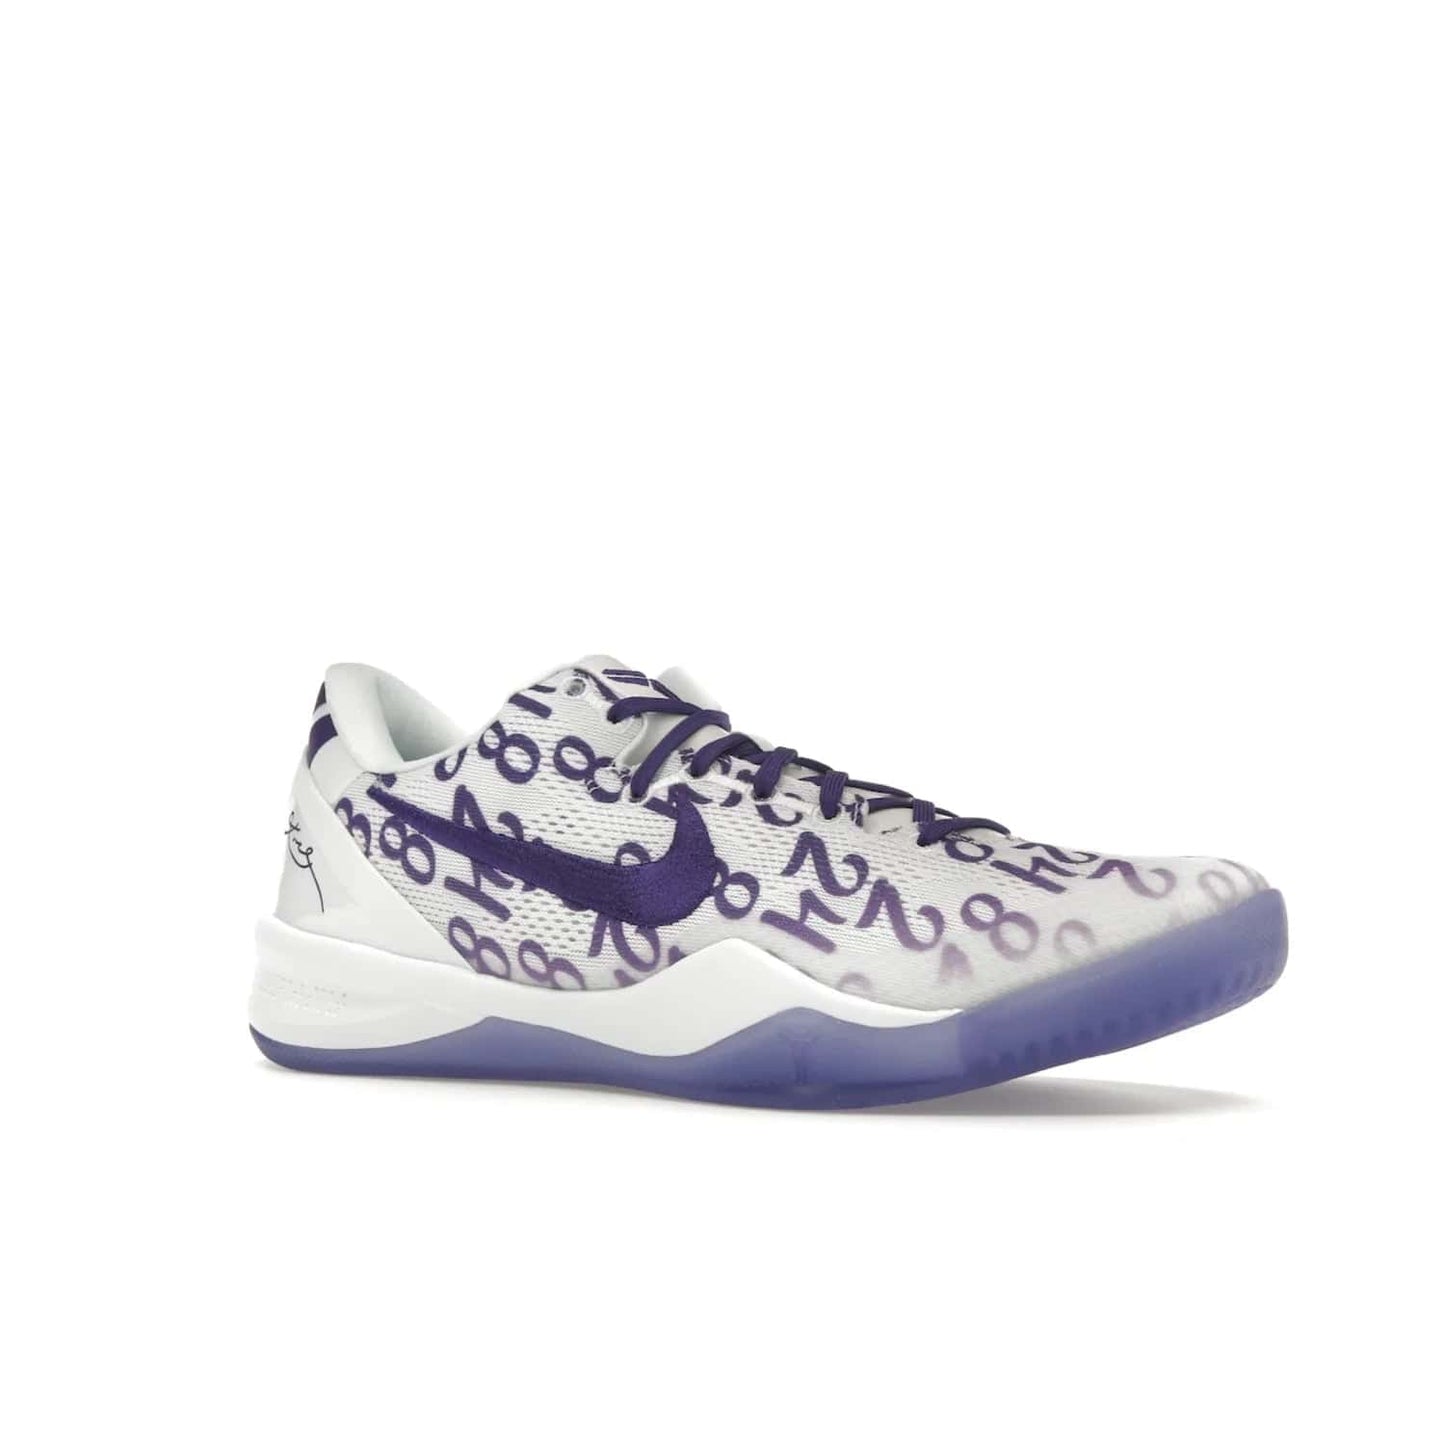 Nike Kobe 8 Protro Court Purple - Image 4 - Only at www.BallersClubKickz.com - 